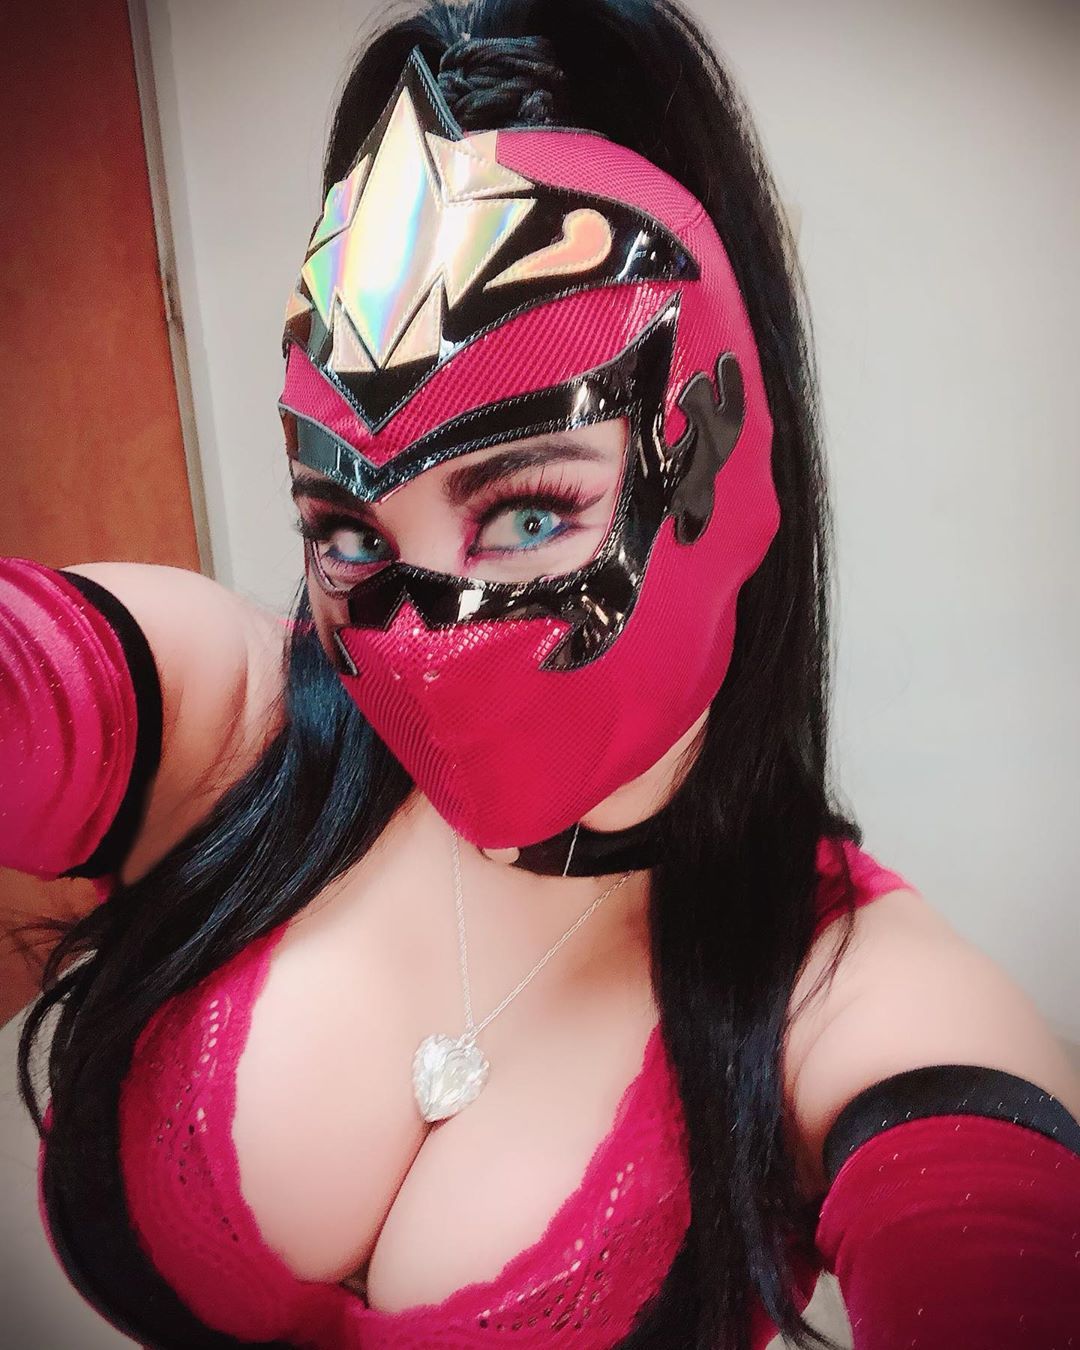 La luchadora mexicana Mystique en onlyfans